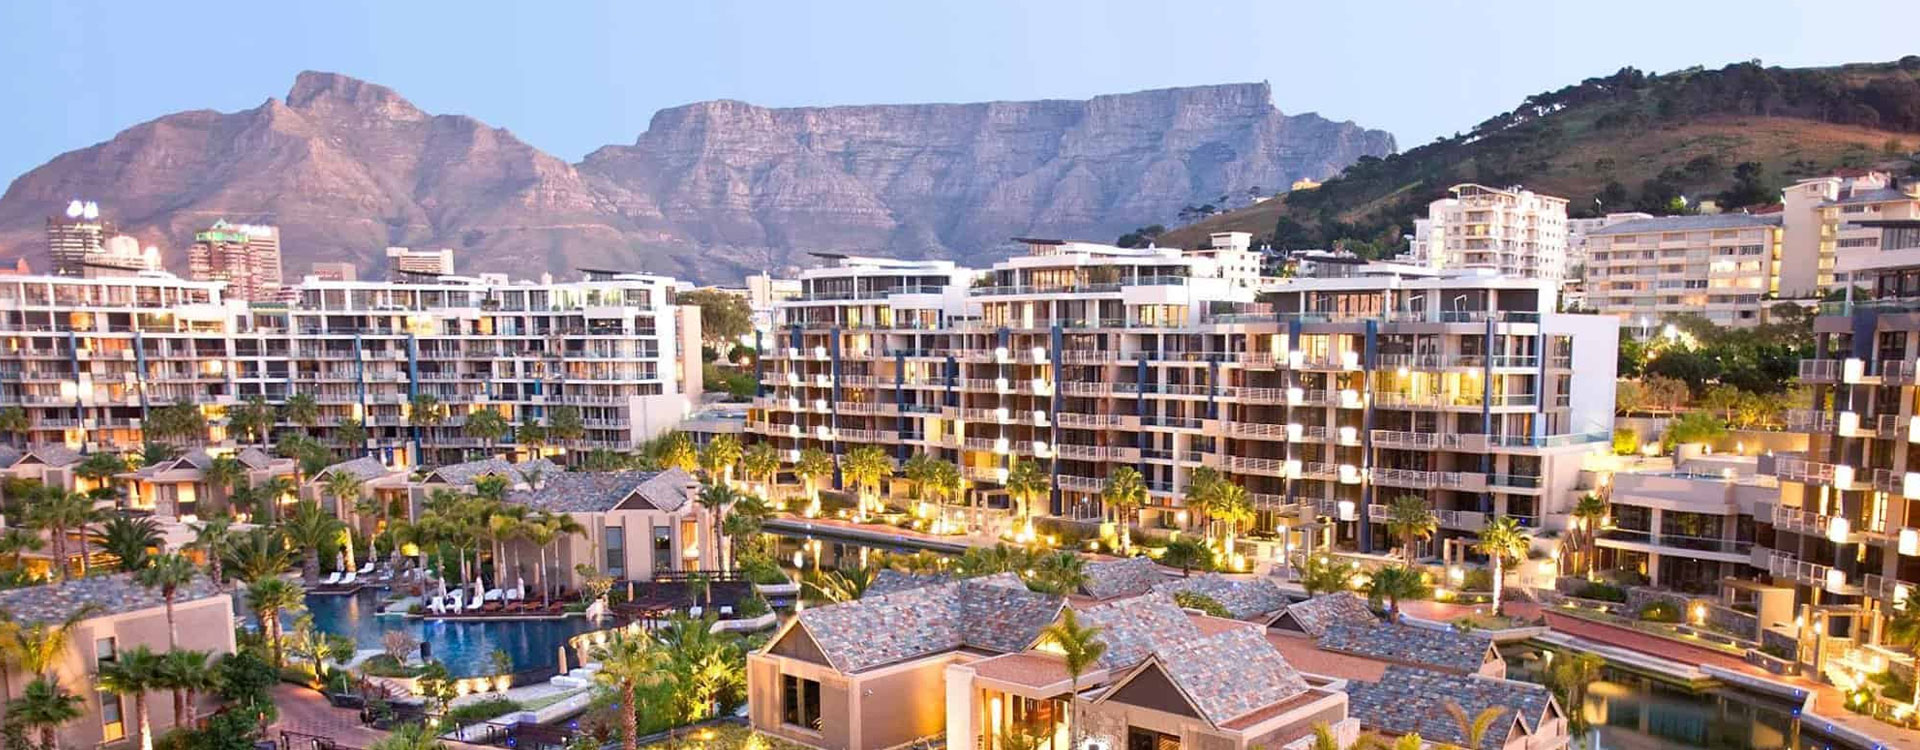 7 Days Johannesburg, Pilanesburg, Cape Town- Luxury